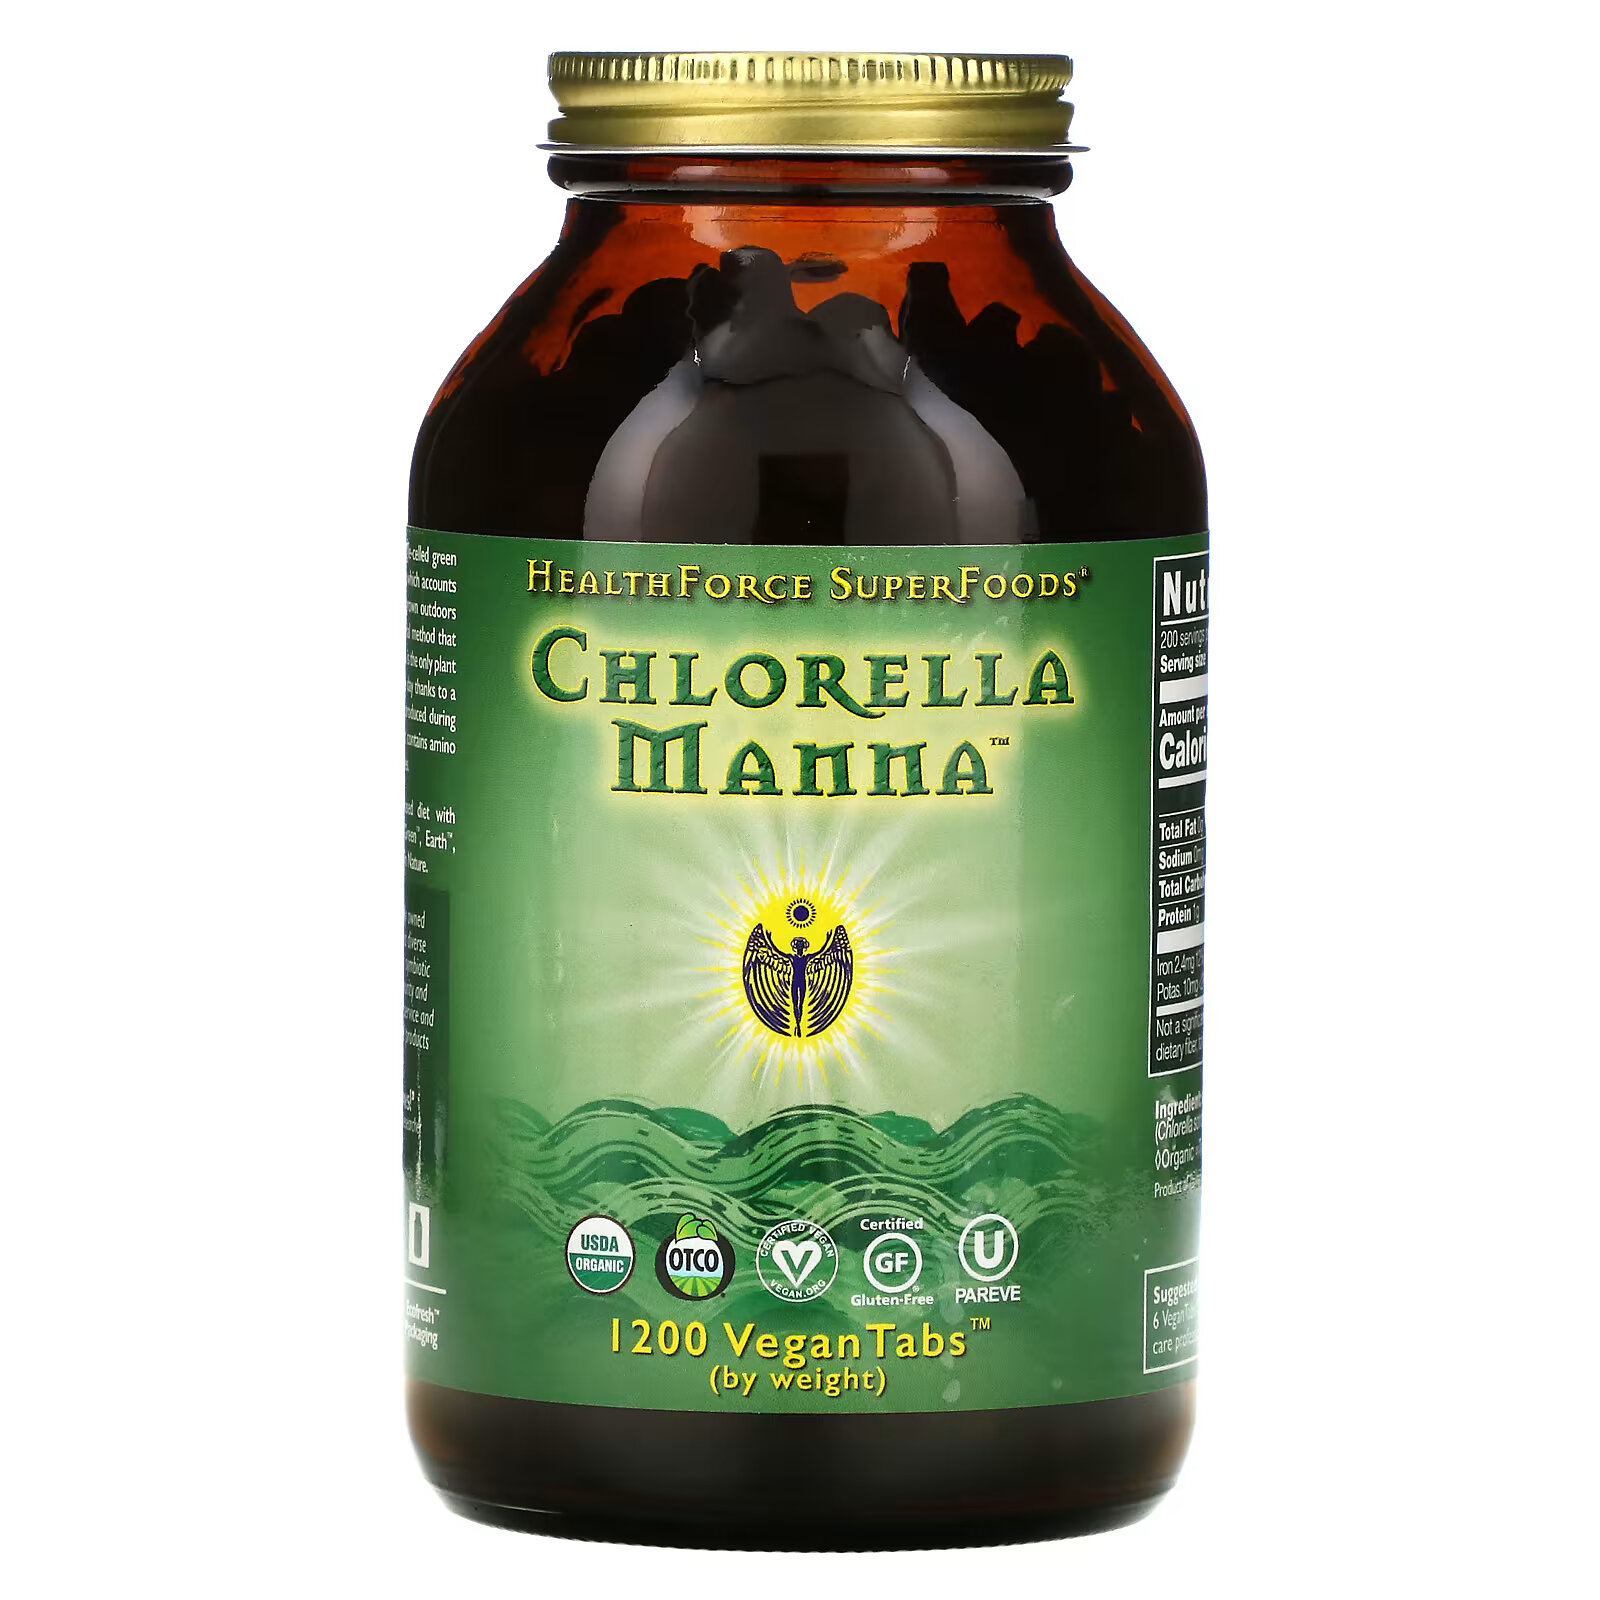 HealthForce Superfoods, Chlorella Manna, добавка с хлореллой, 1200 веганских таблеток цена и фото